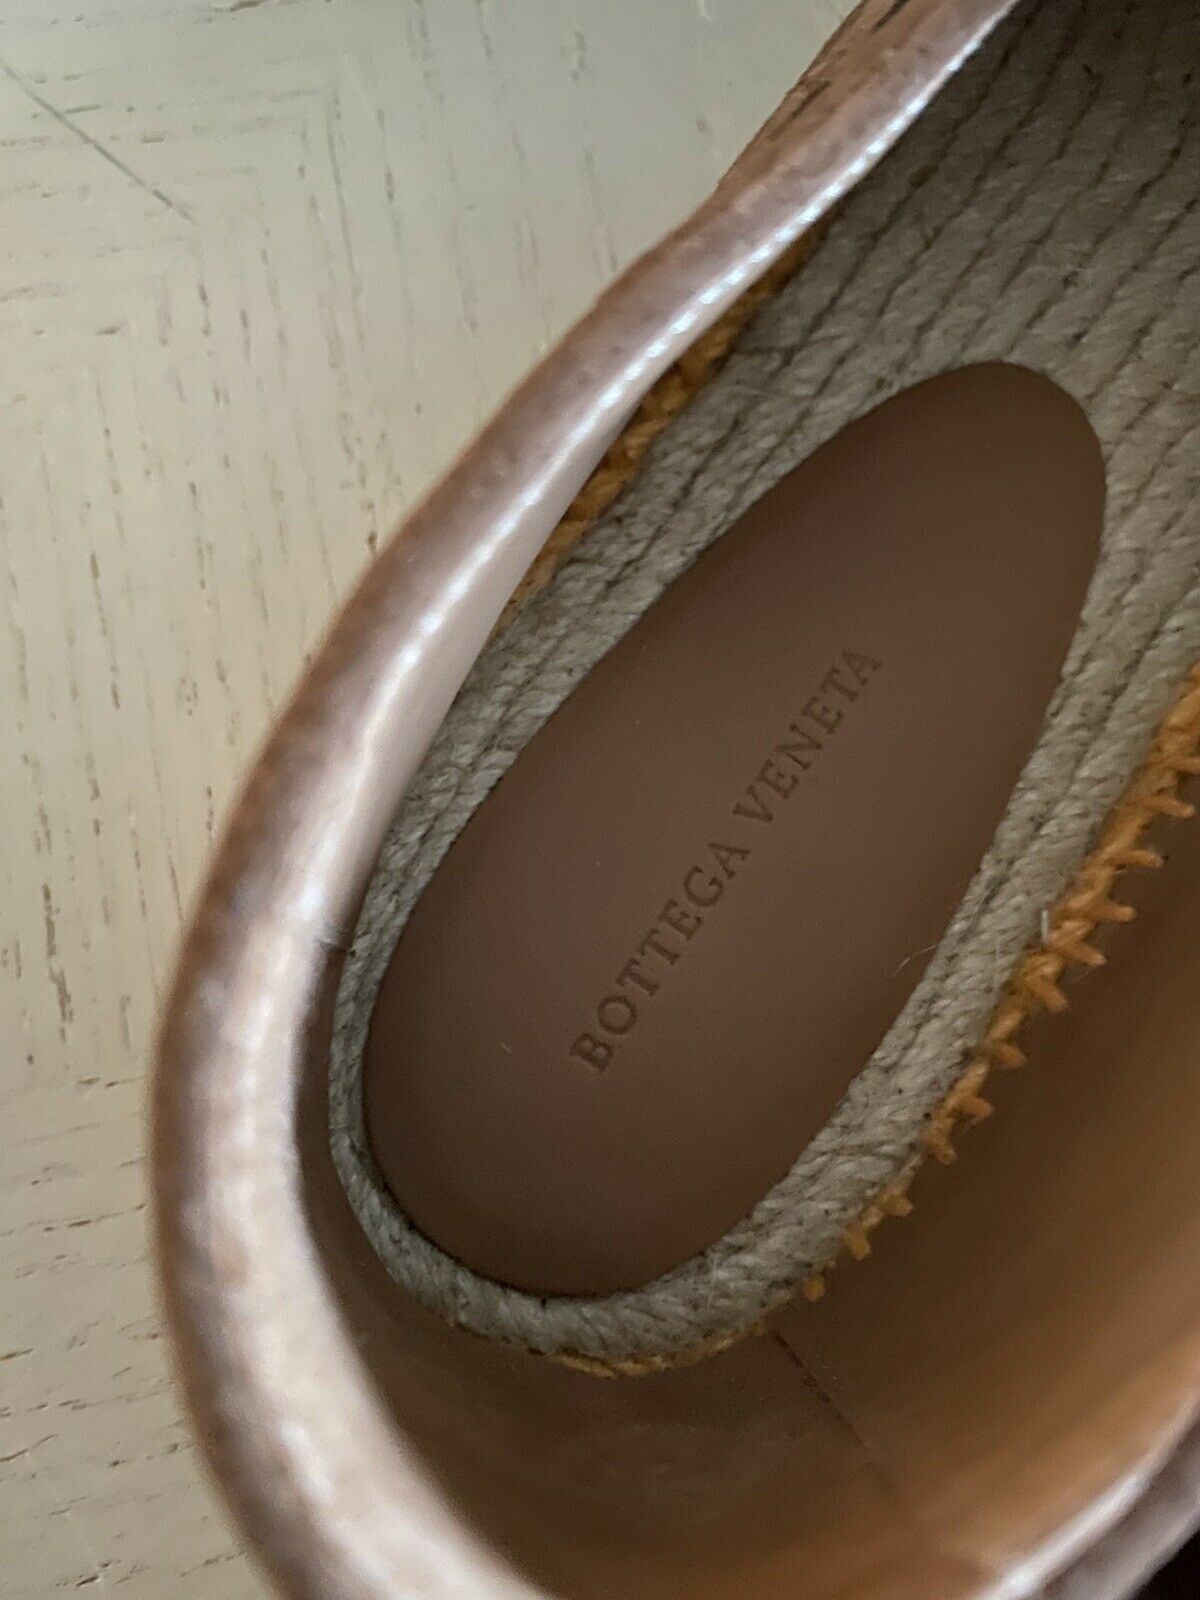 New Bottega Veneta Men Suede Espadrille Shoes Brown 11 US ( 44 Eu ) Italy